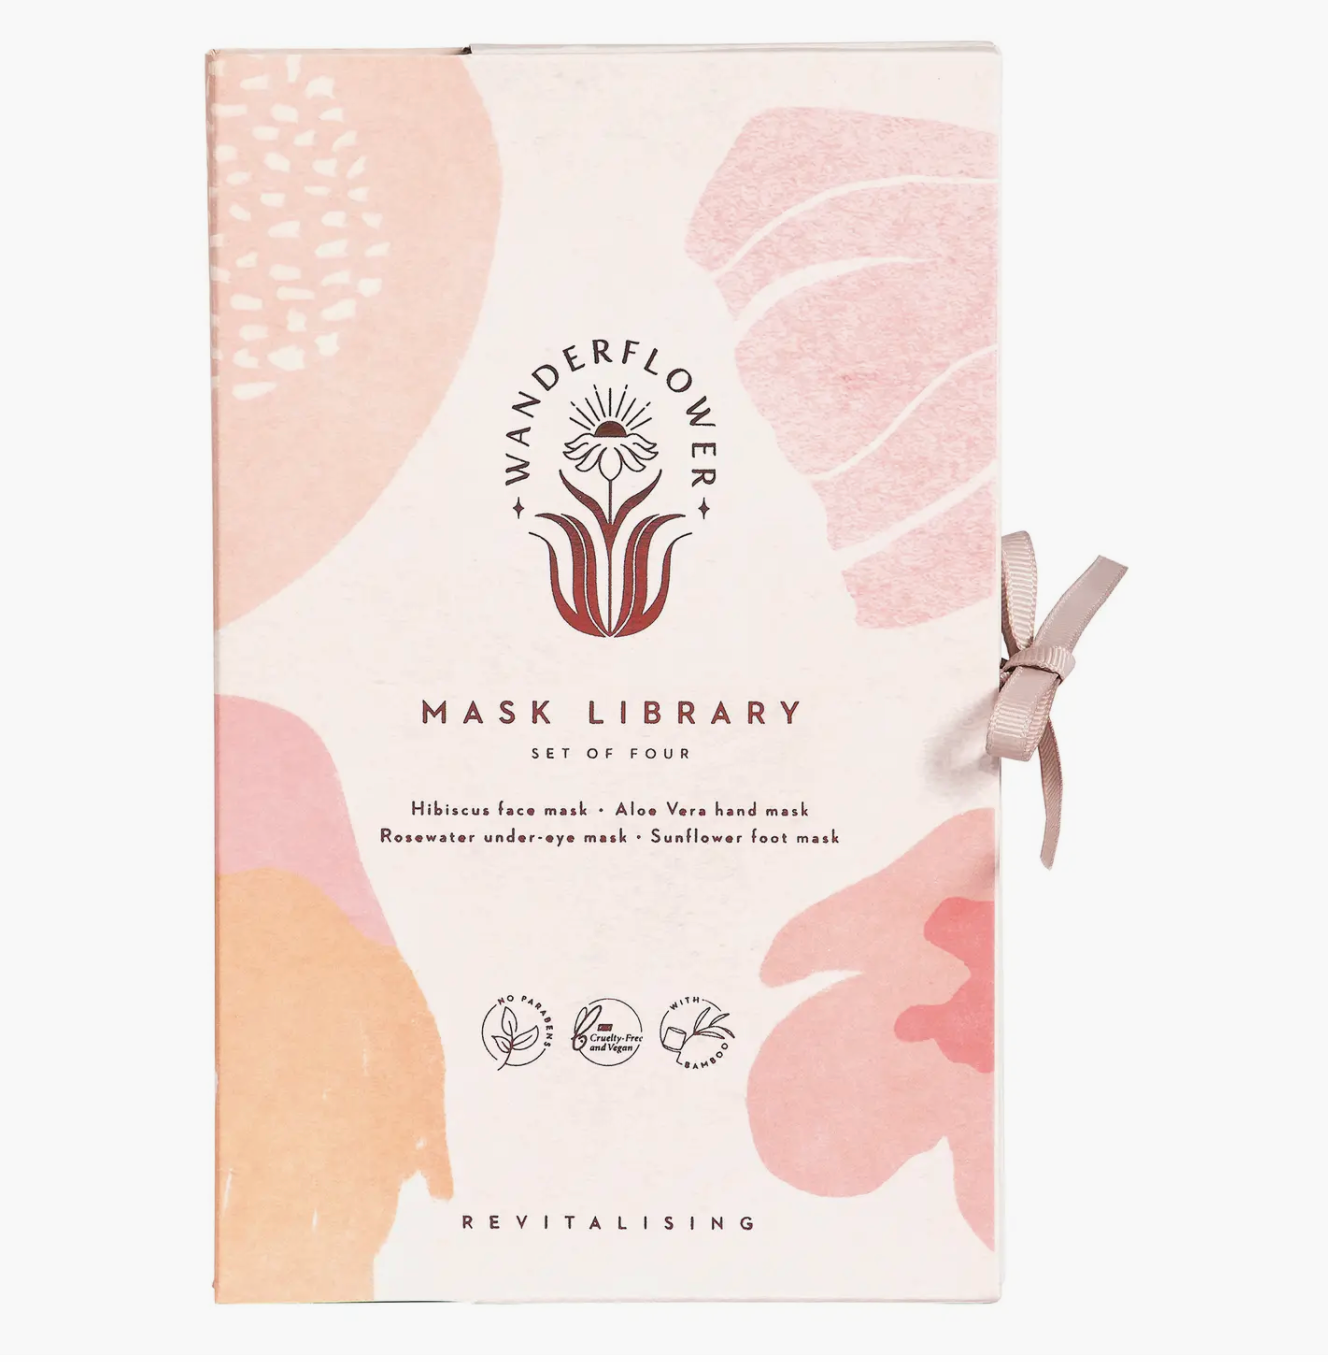 Wanderflower Mask Library Gift Set